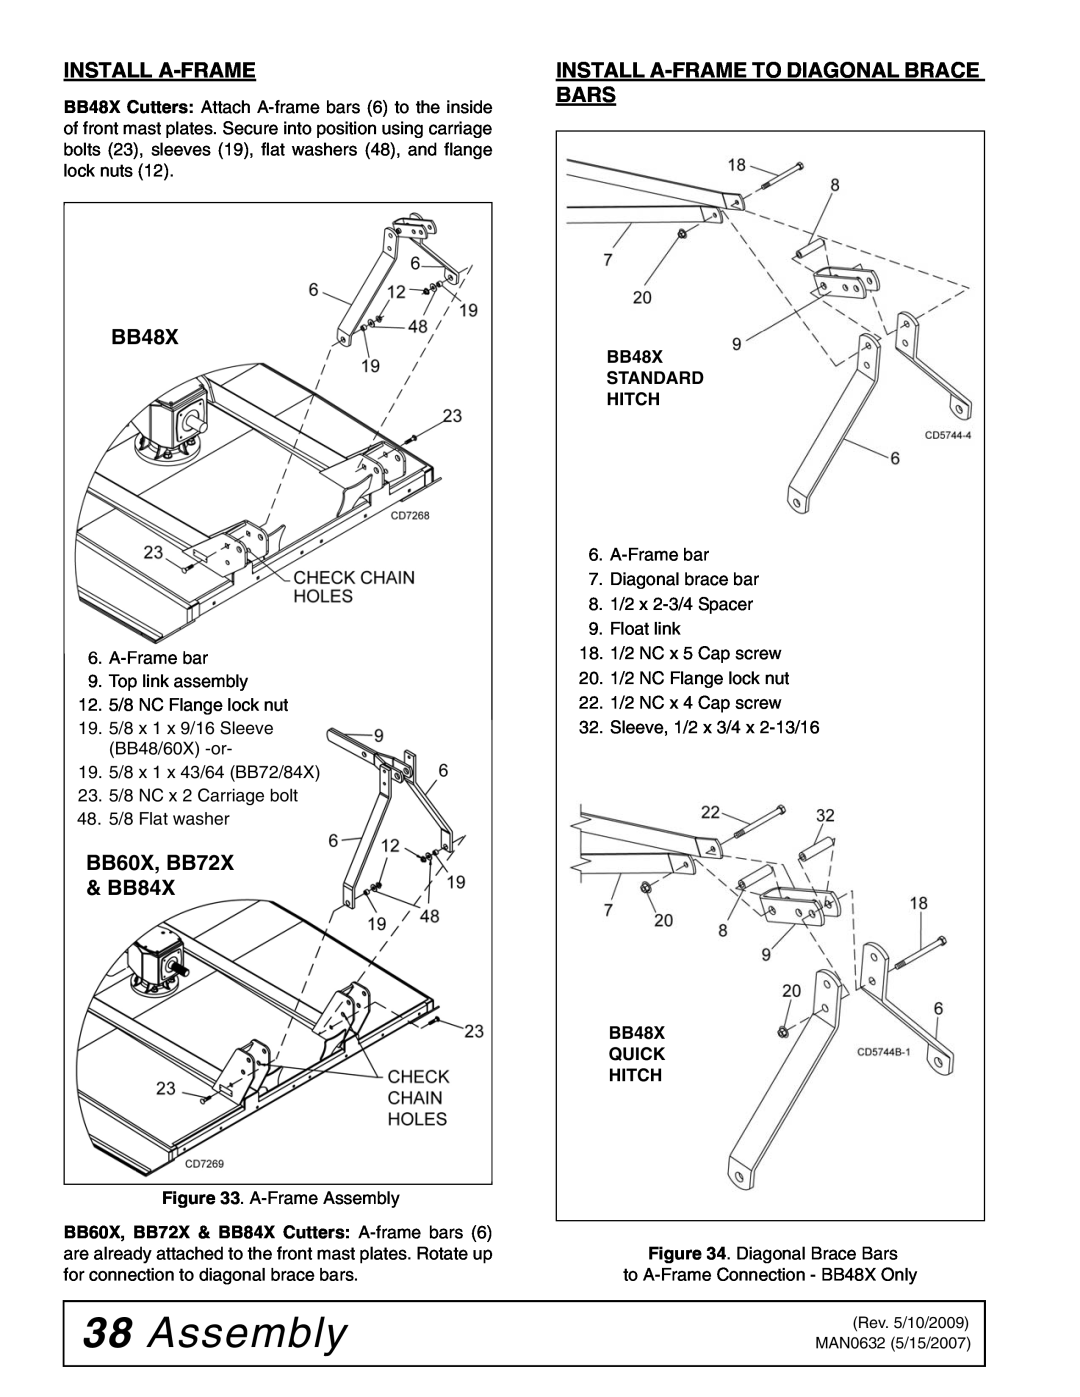 Woods Equipment manual 38Assembly, BB48X, BB60X, BB72X & BB84X, Install A-Frameto Diagonal Brace Bars 